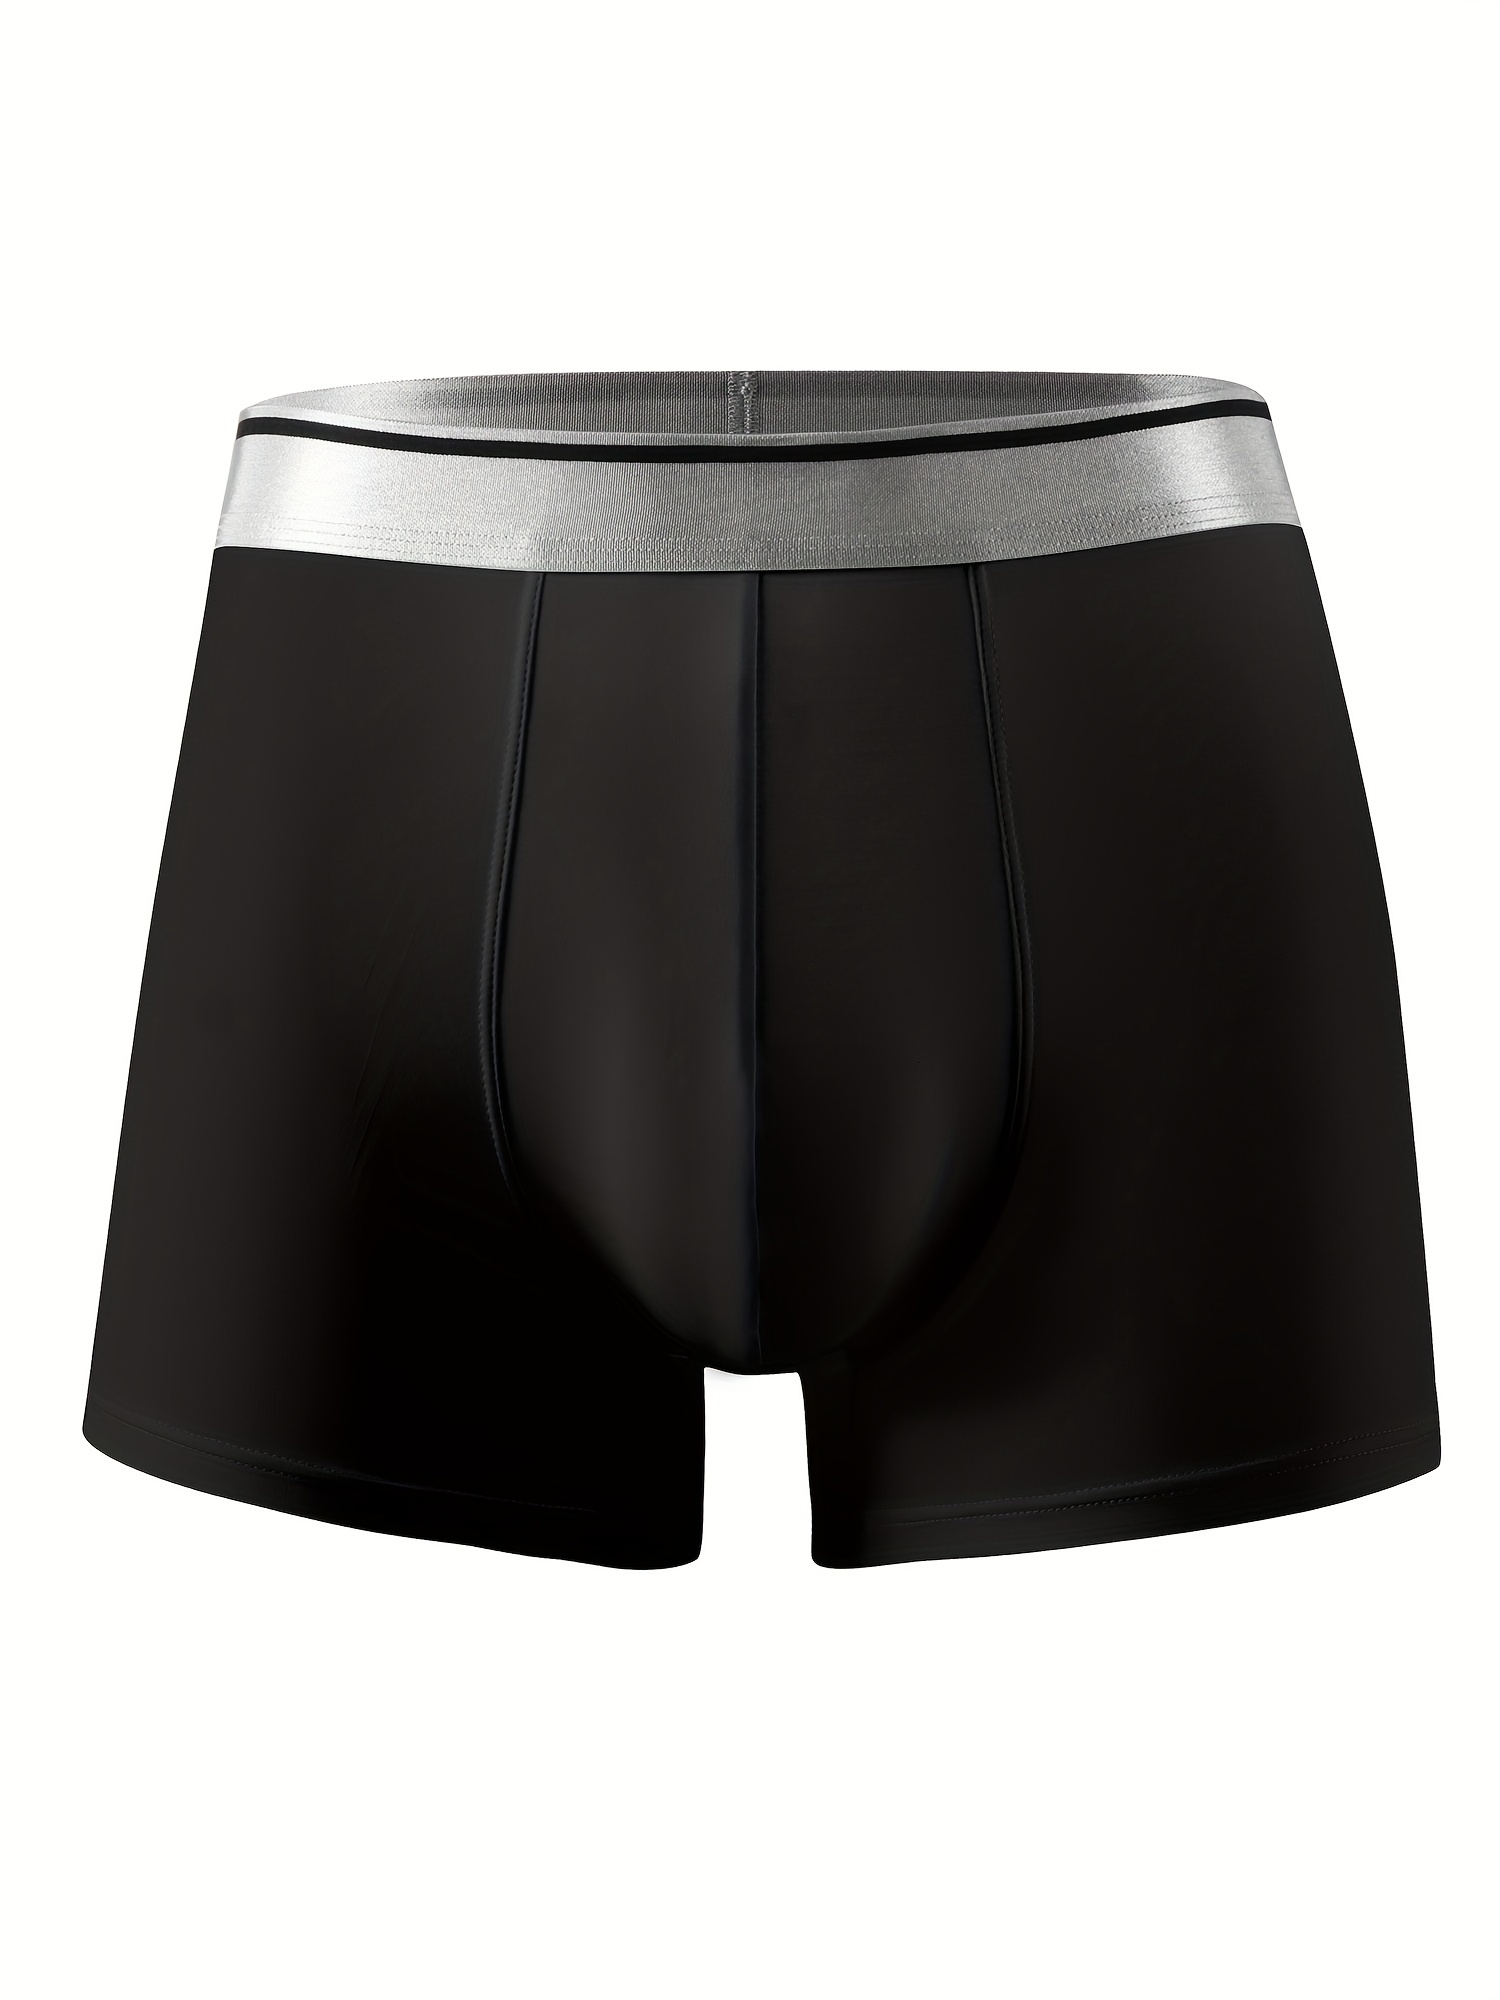 Briefs Underwear M~3XL Nylon+Spandex Panties Seamless Sexy Skin